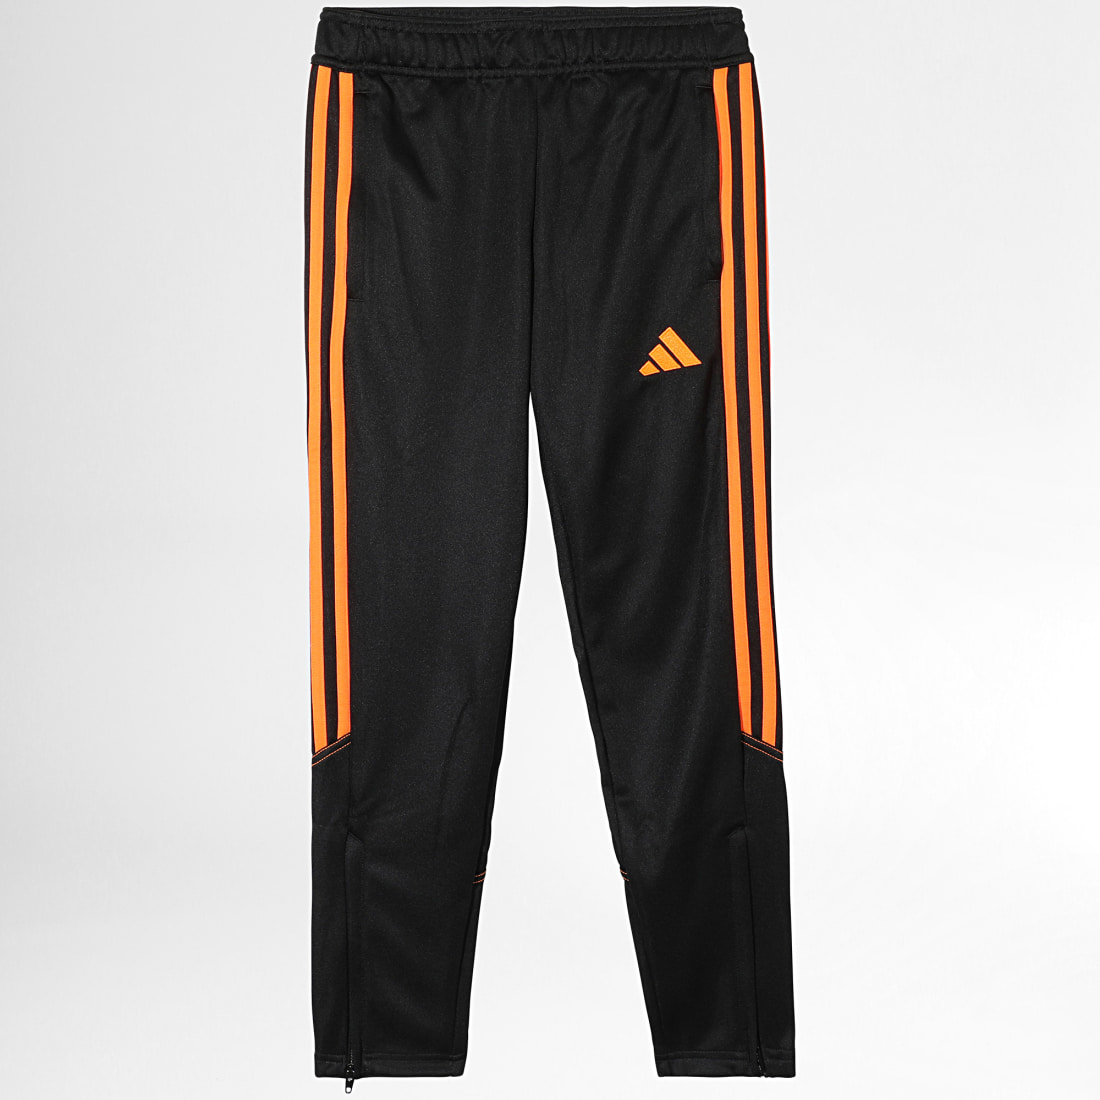 Pantalon survêtement adidas Tiro noir orange sur